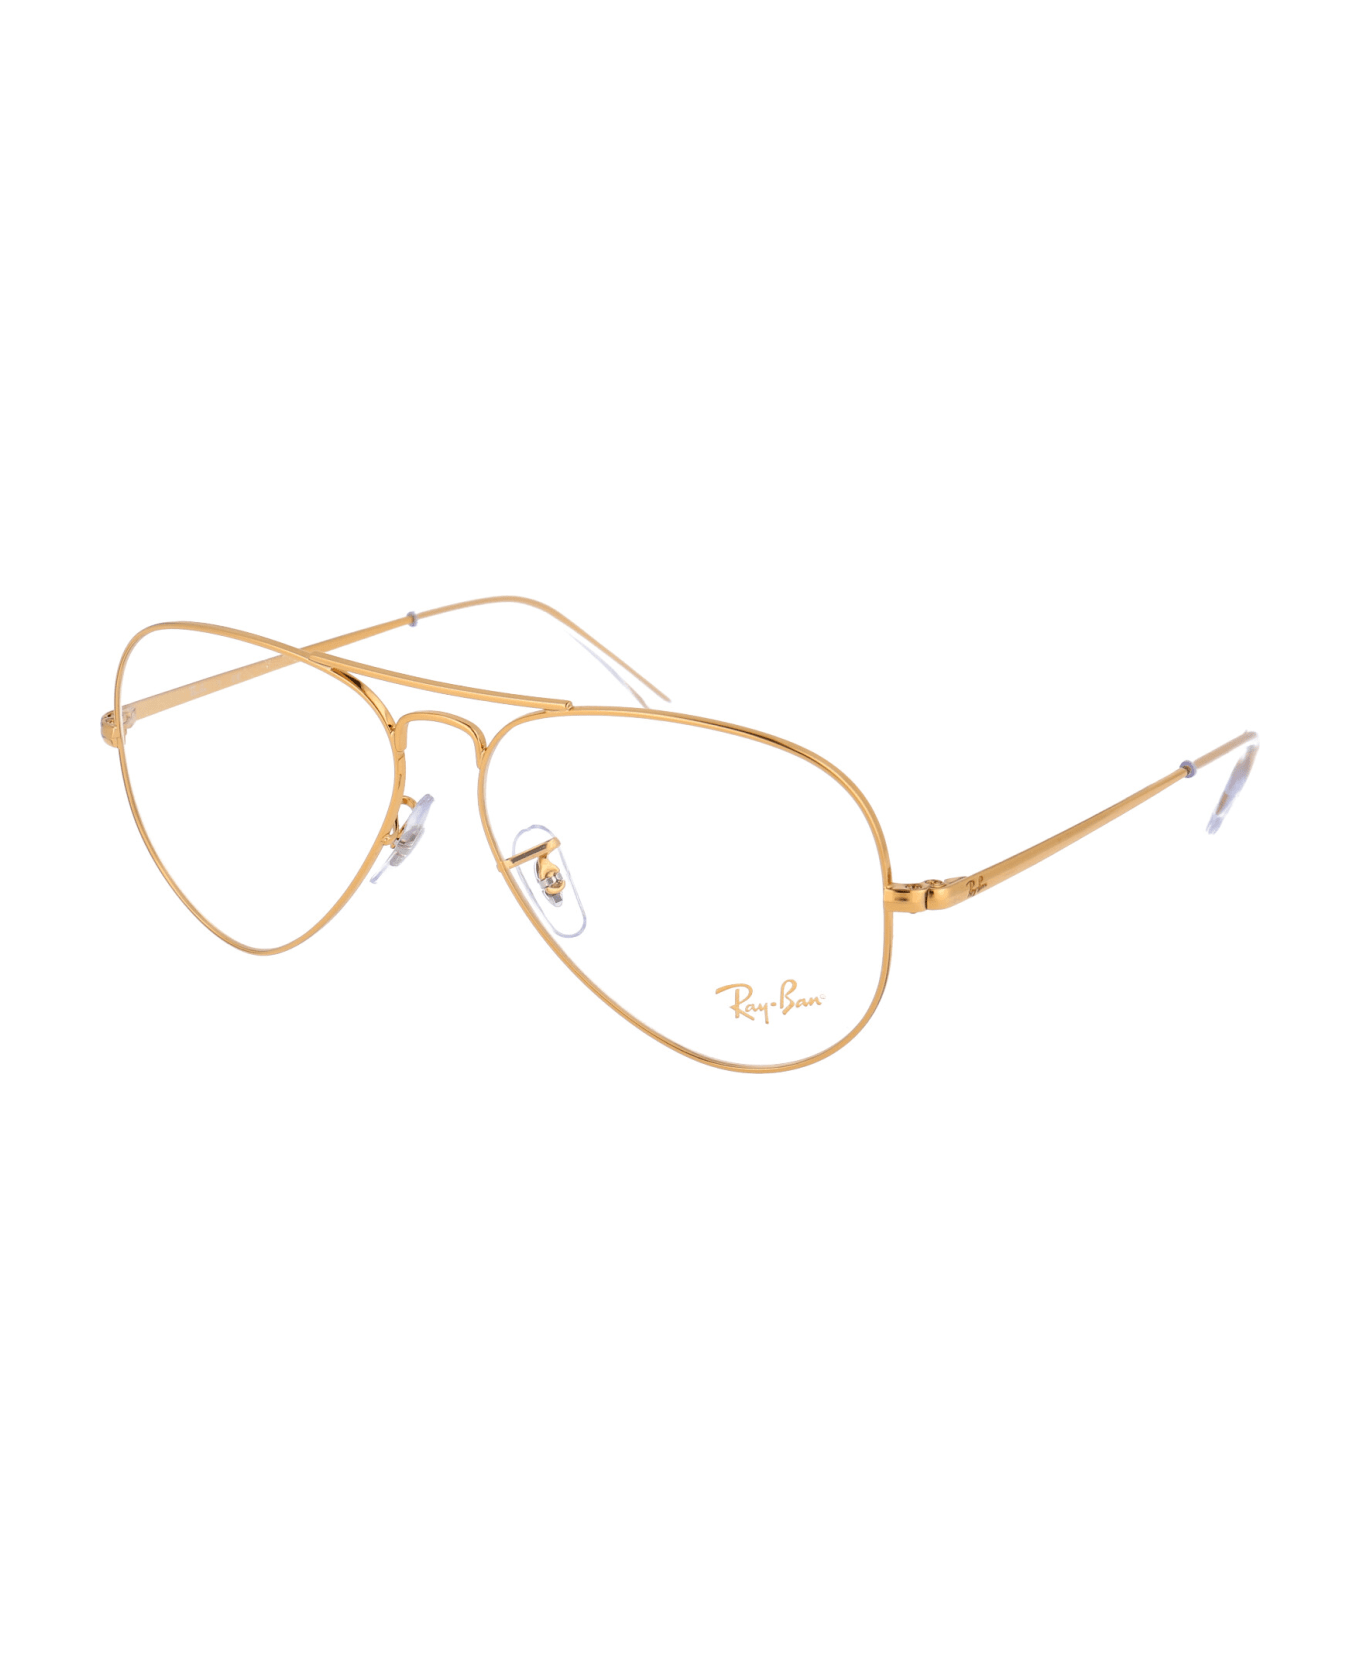 Ray-Ban Aviator Glasses - 3086 Gold アイウェア